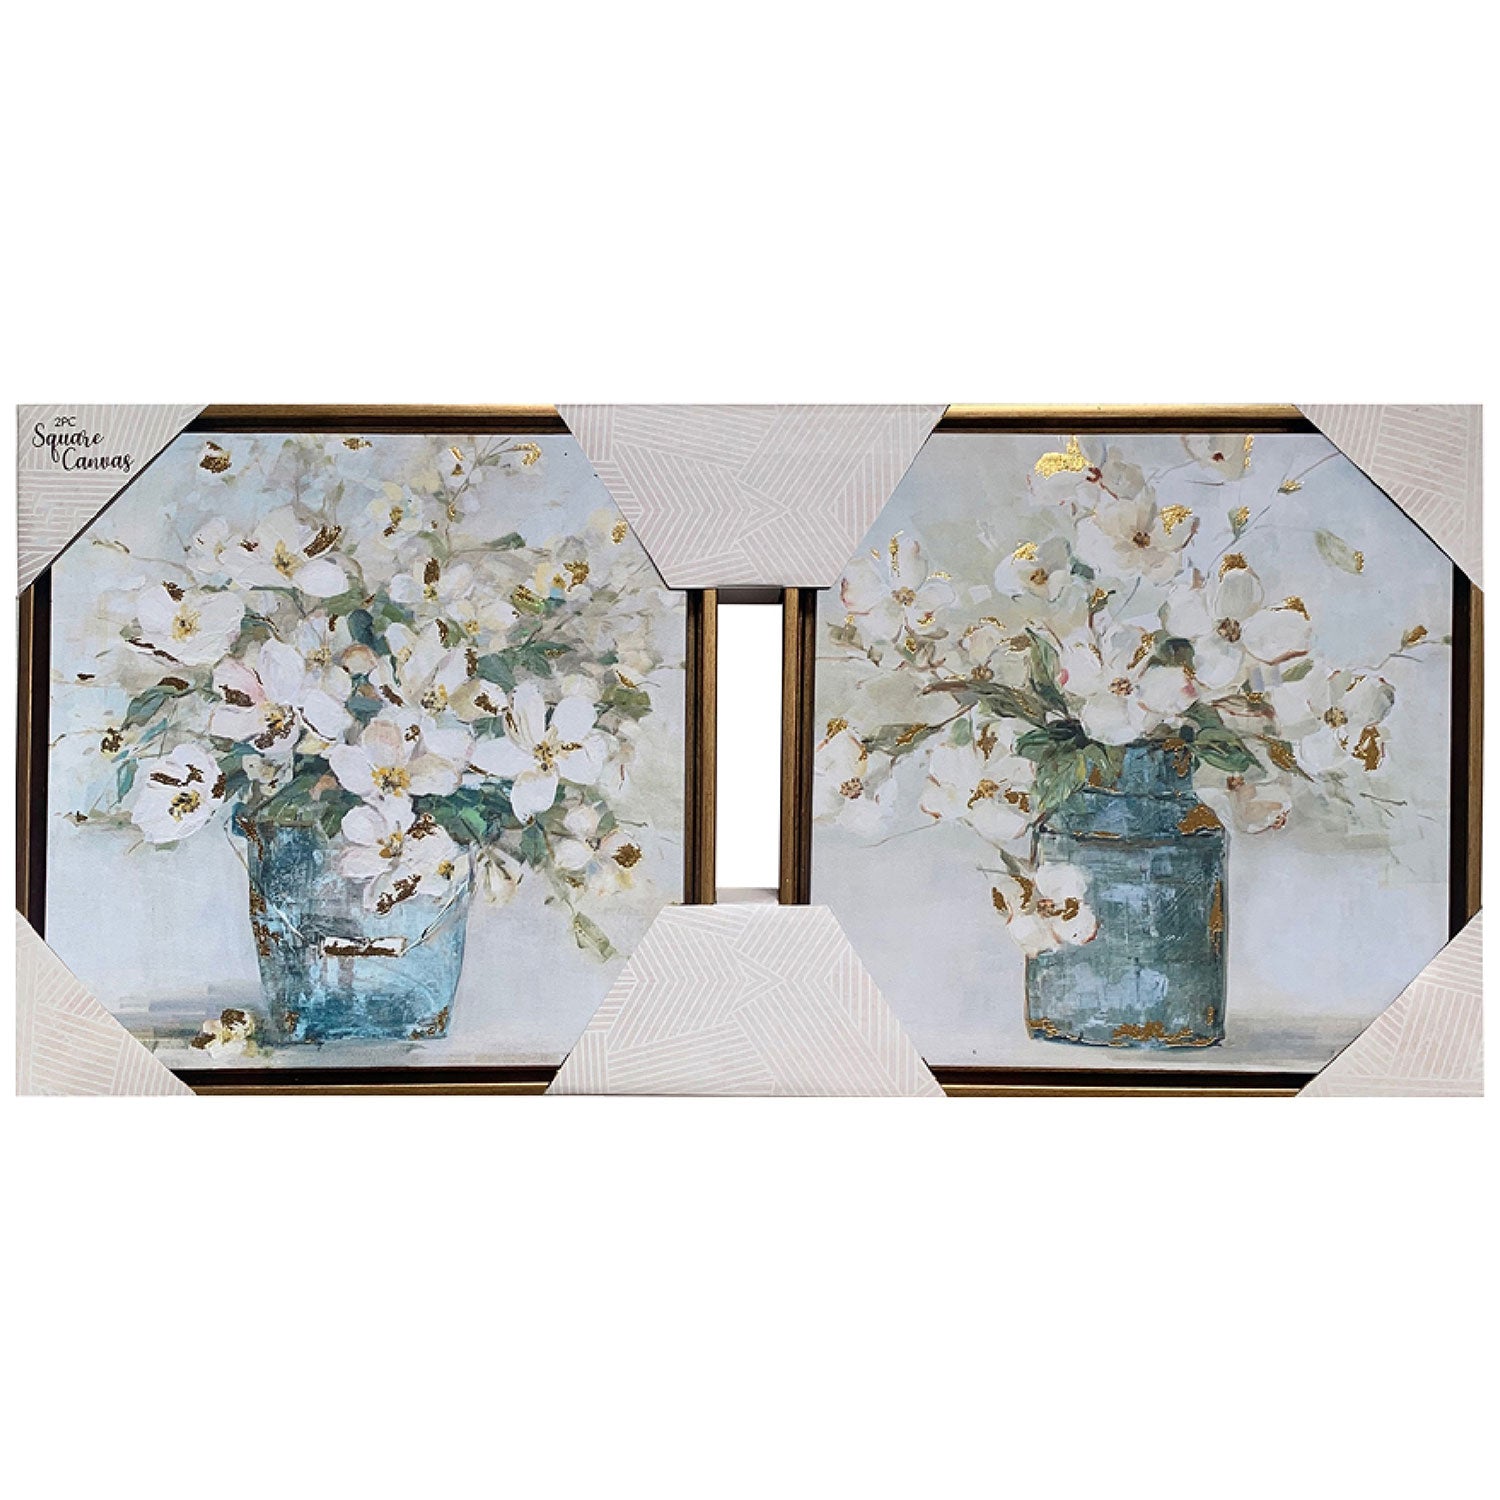 Premius 2 Piece Floral Arrangement Framed Canvas Wall Art Set, 12x12 Inches